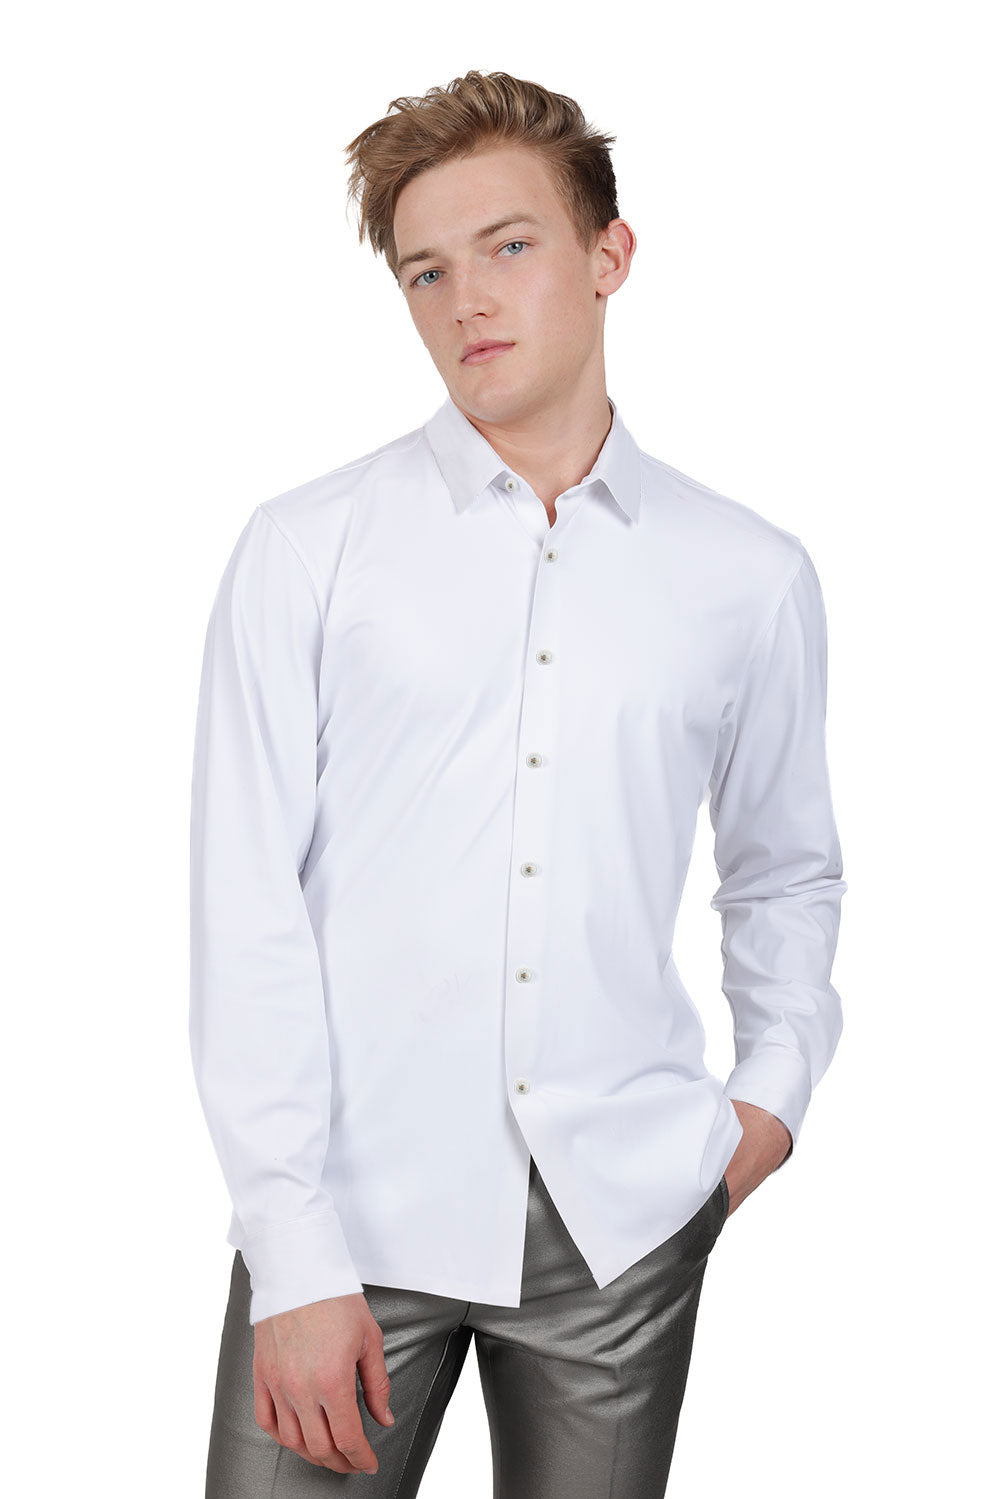 Barabas Men's  Premium No Stitches Long Sleeves Shirts 2B400 White